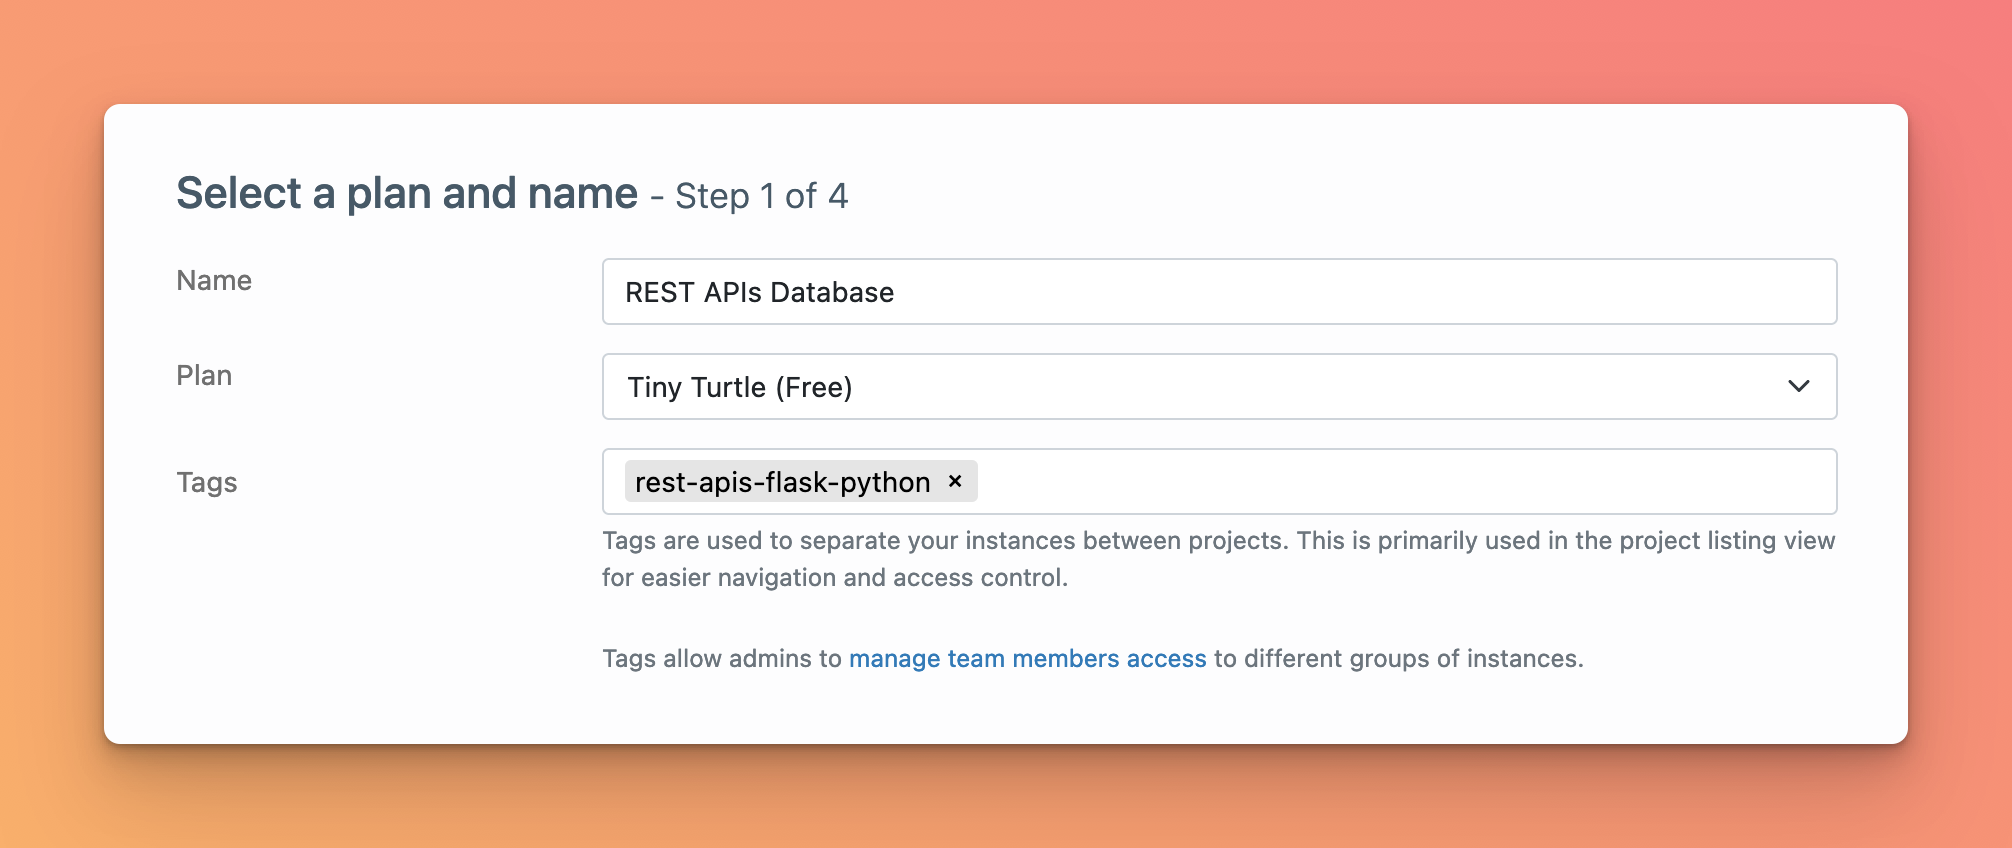 ElephantSQL screenshot showing plan configuration of Tiny Turtle (free) and name